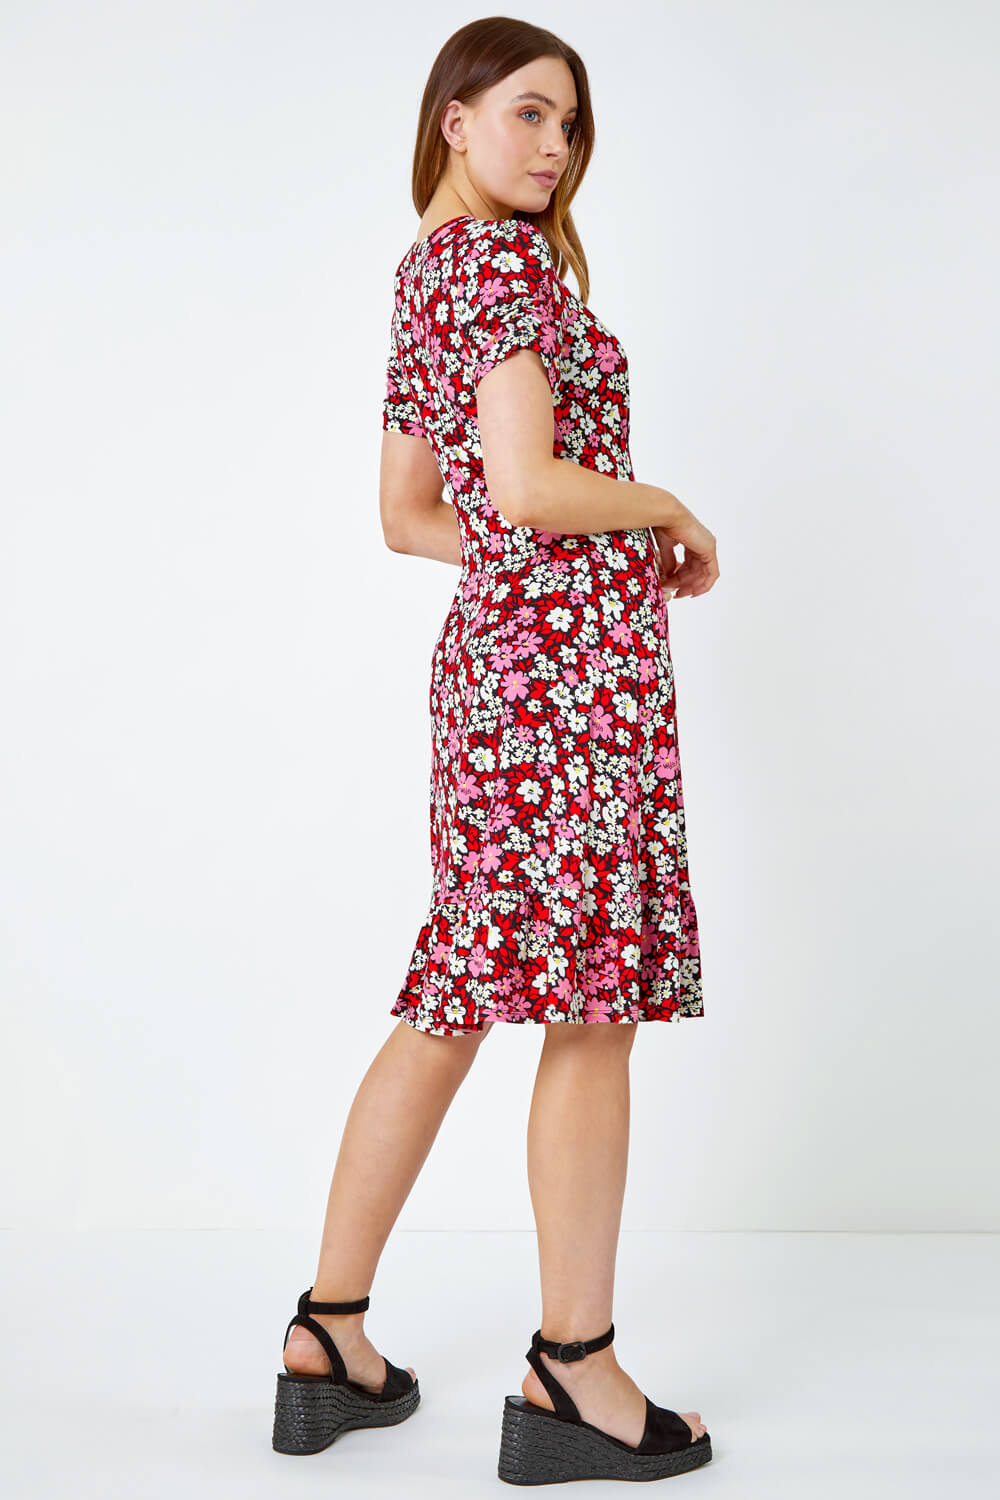 PINK Floral Print Stretch Jersey Tea Dress, Image 4 of 6